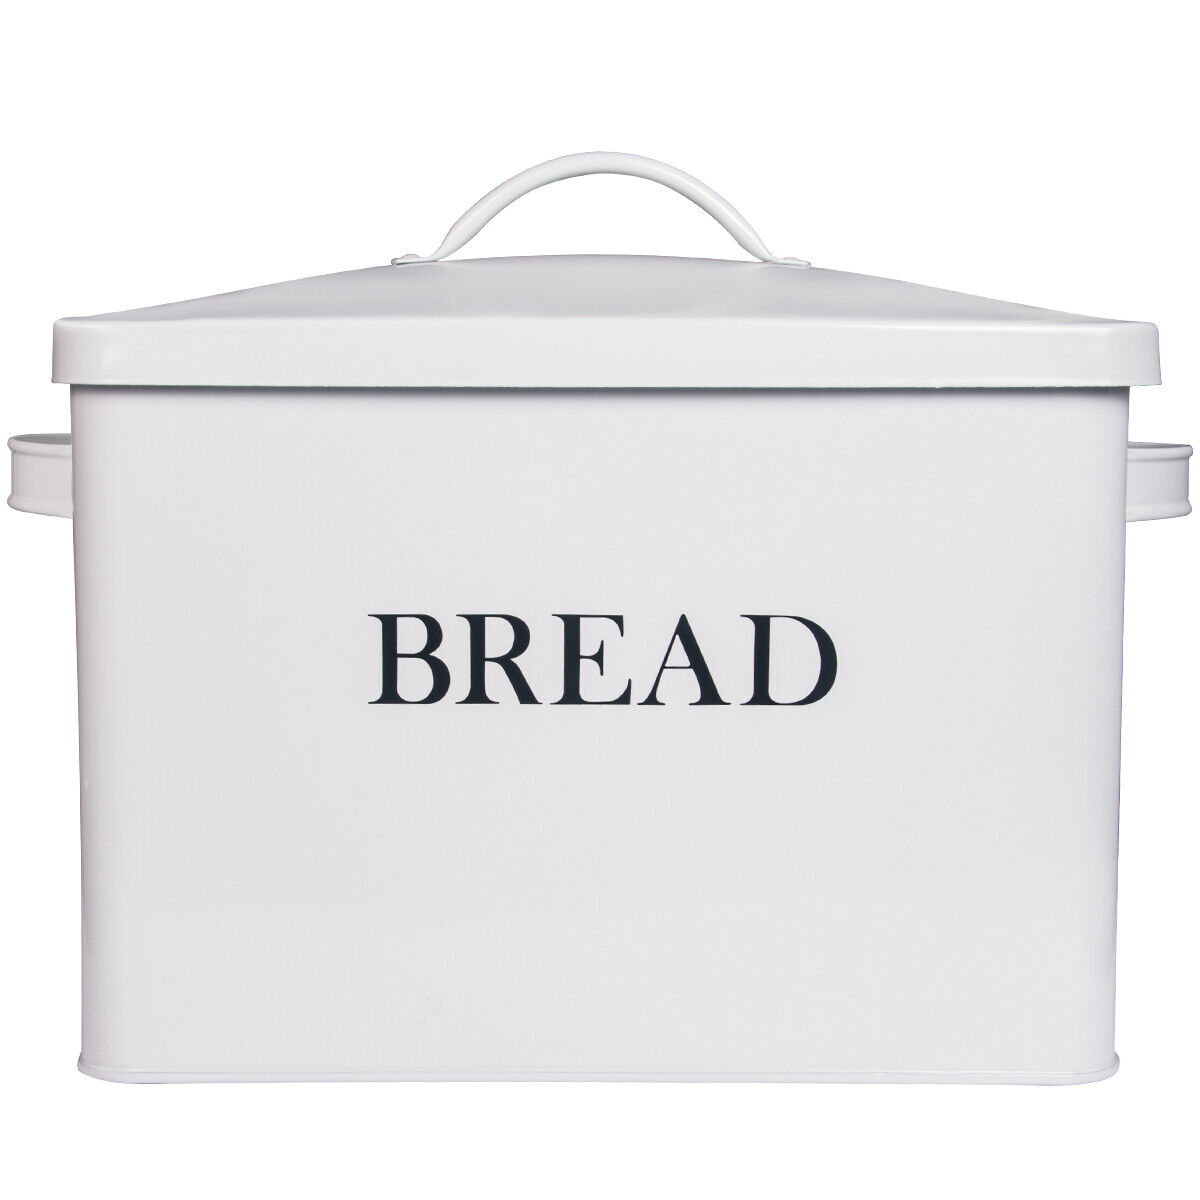 Bread Box Stainless Steel Vintage Bread Storage Bin Kitchen Cake Food Container